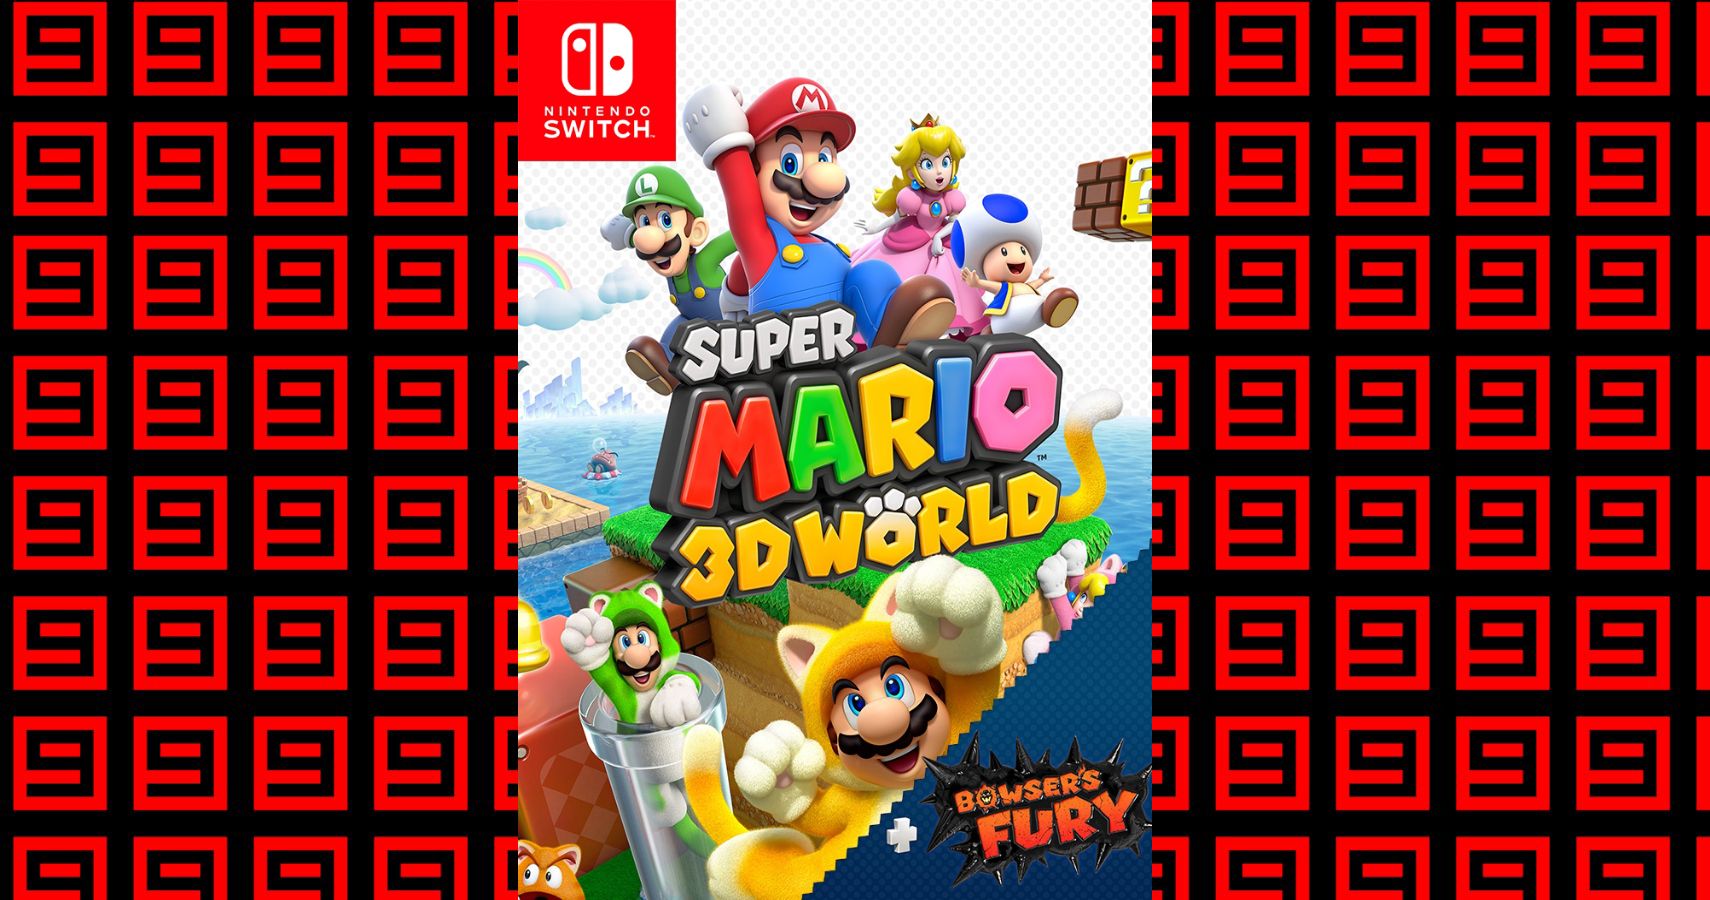 Super Mario 3d World + Bowser's Fury - Nintendo Switch : Target